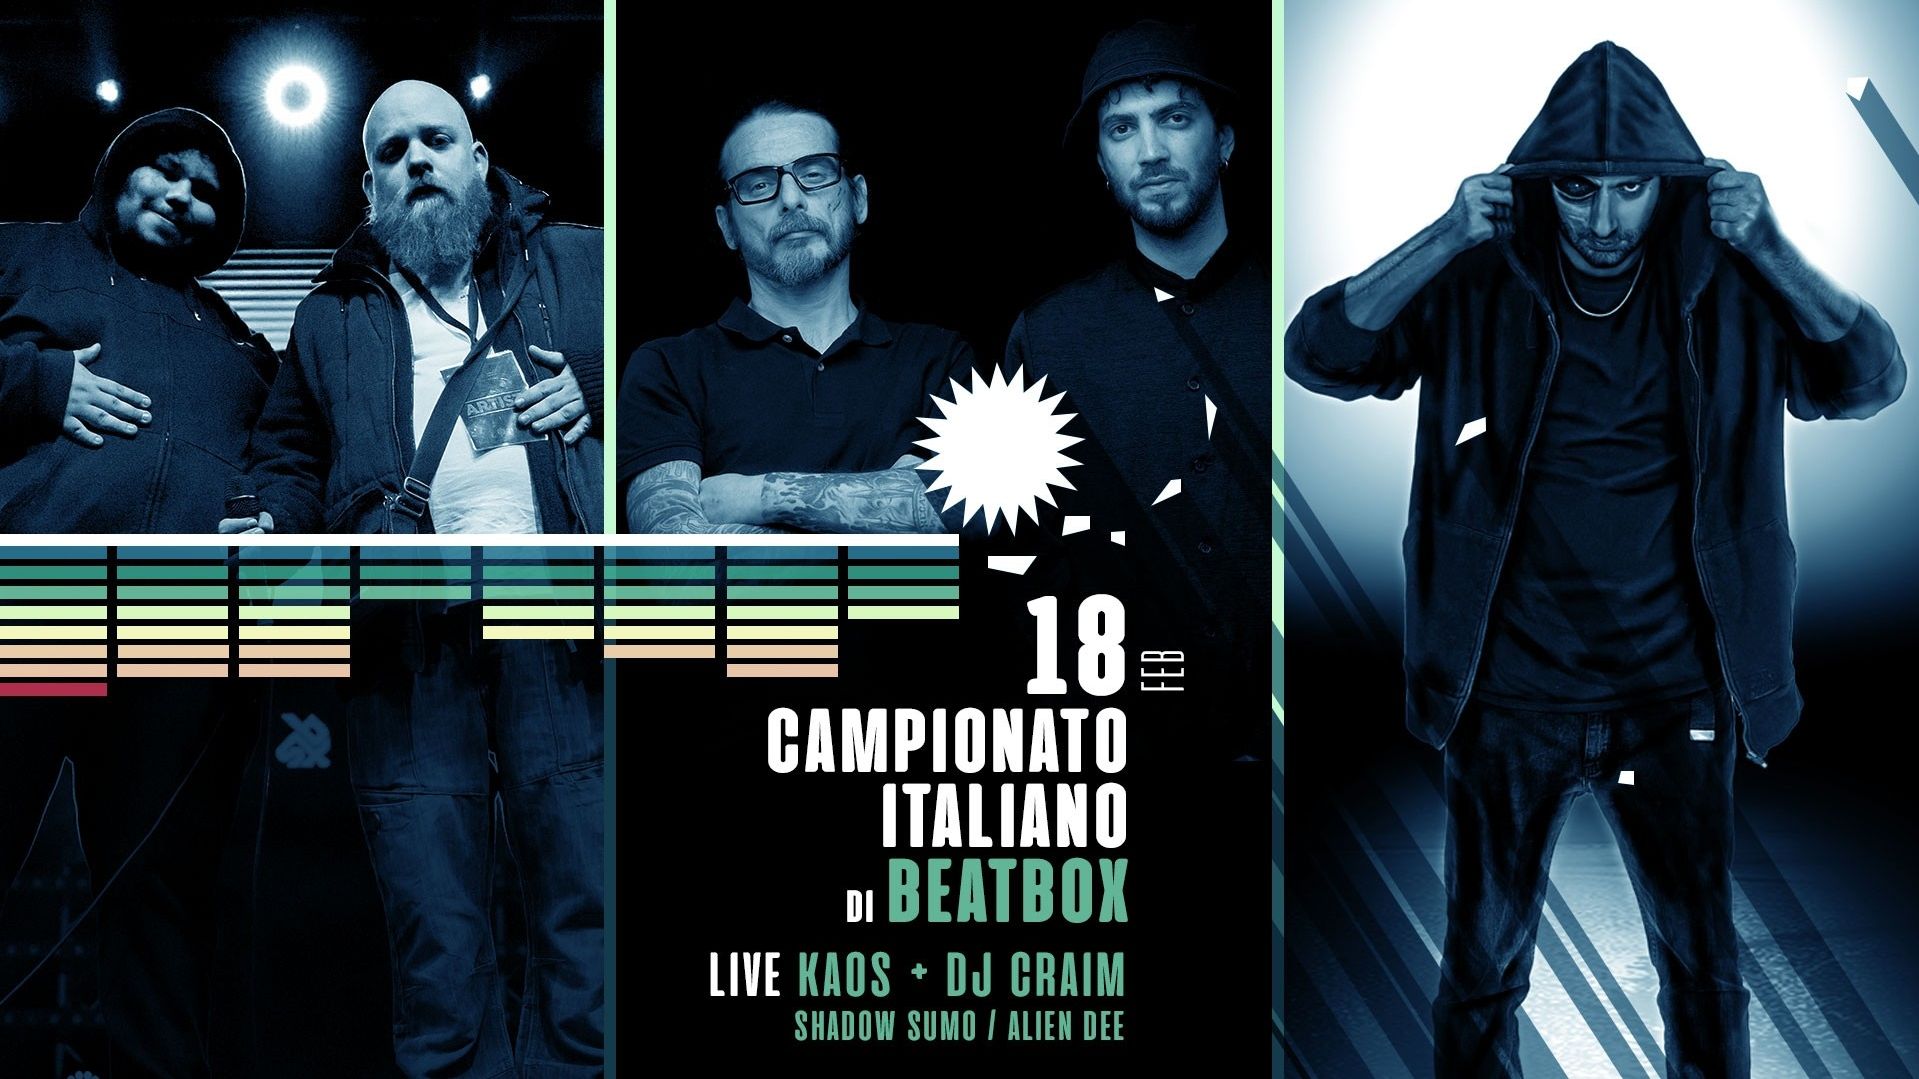 ✹ Campionato Italiano di Beatbox + Kaos / Dj Craim ✹